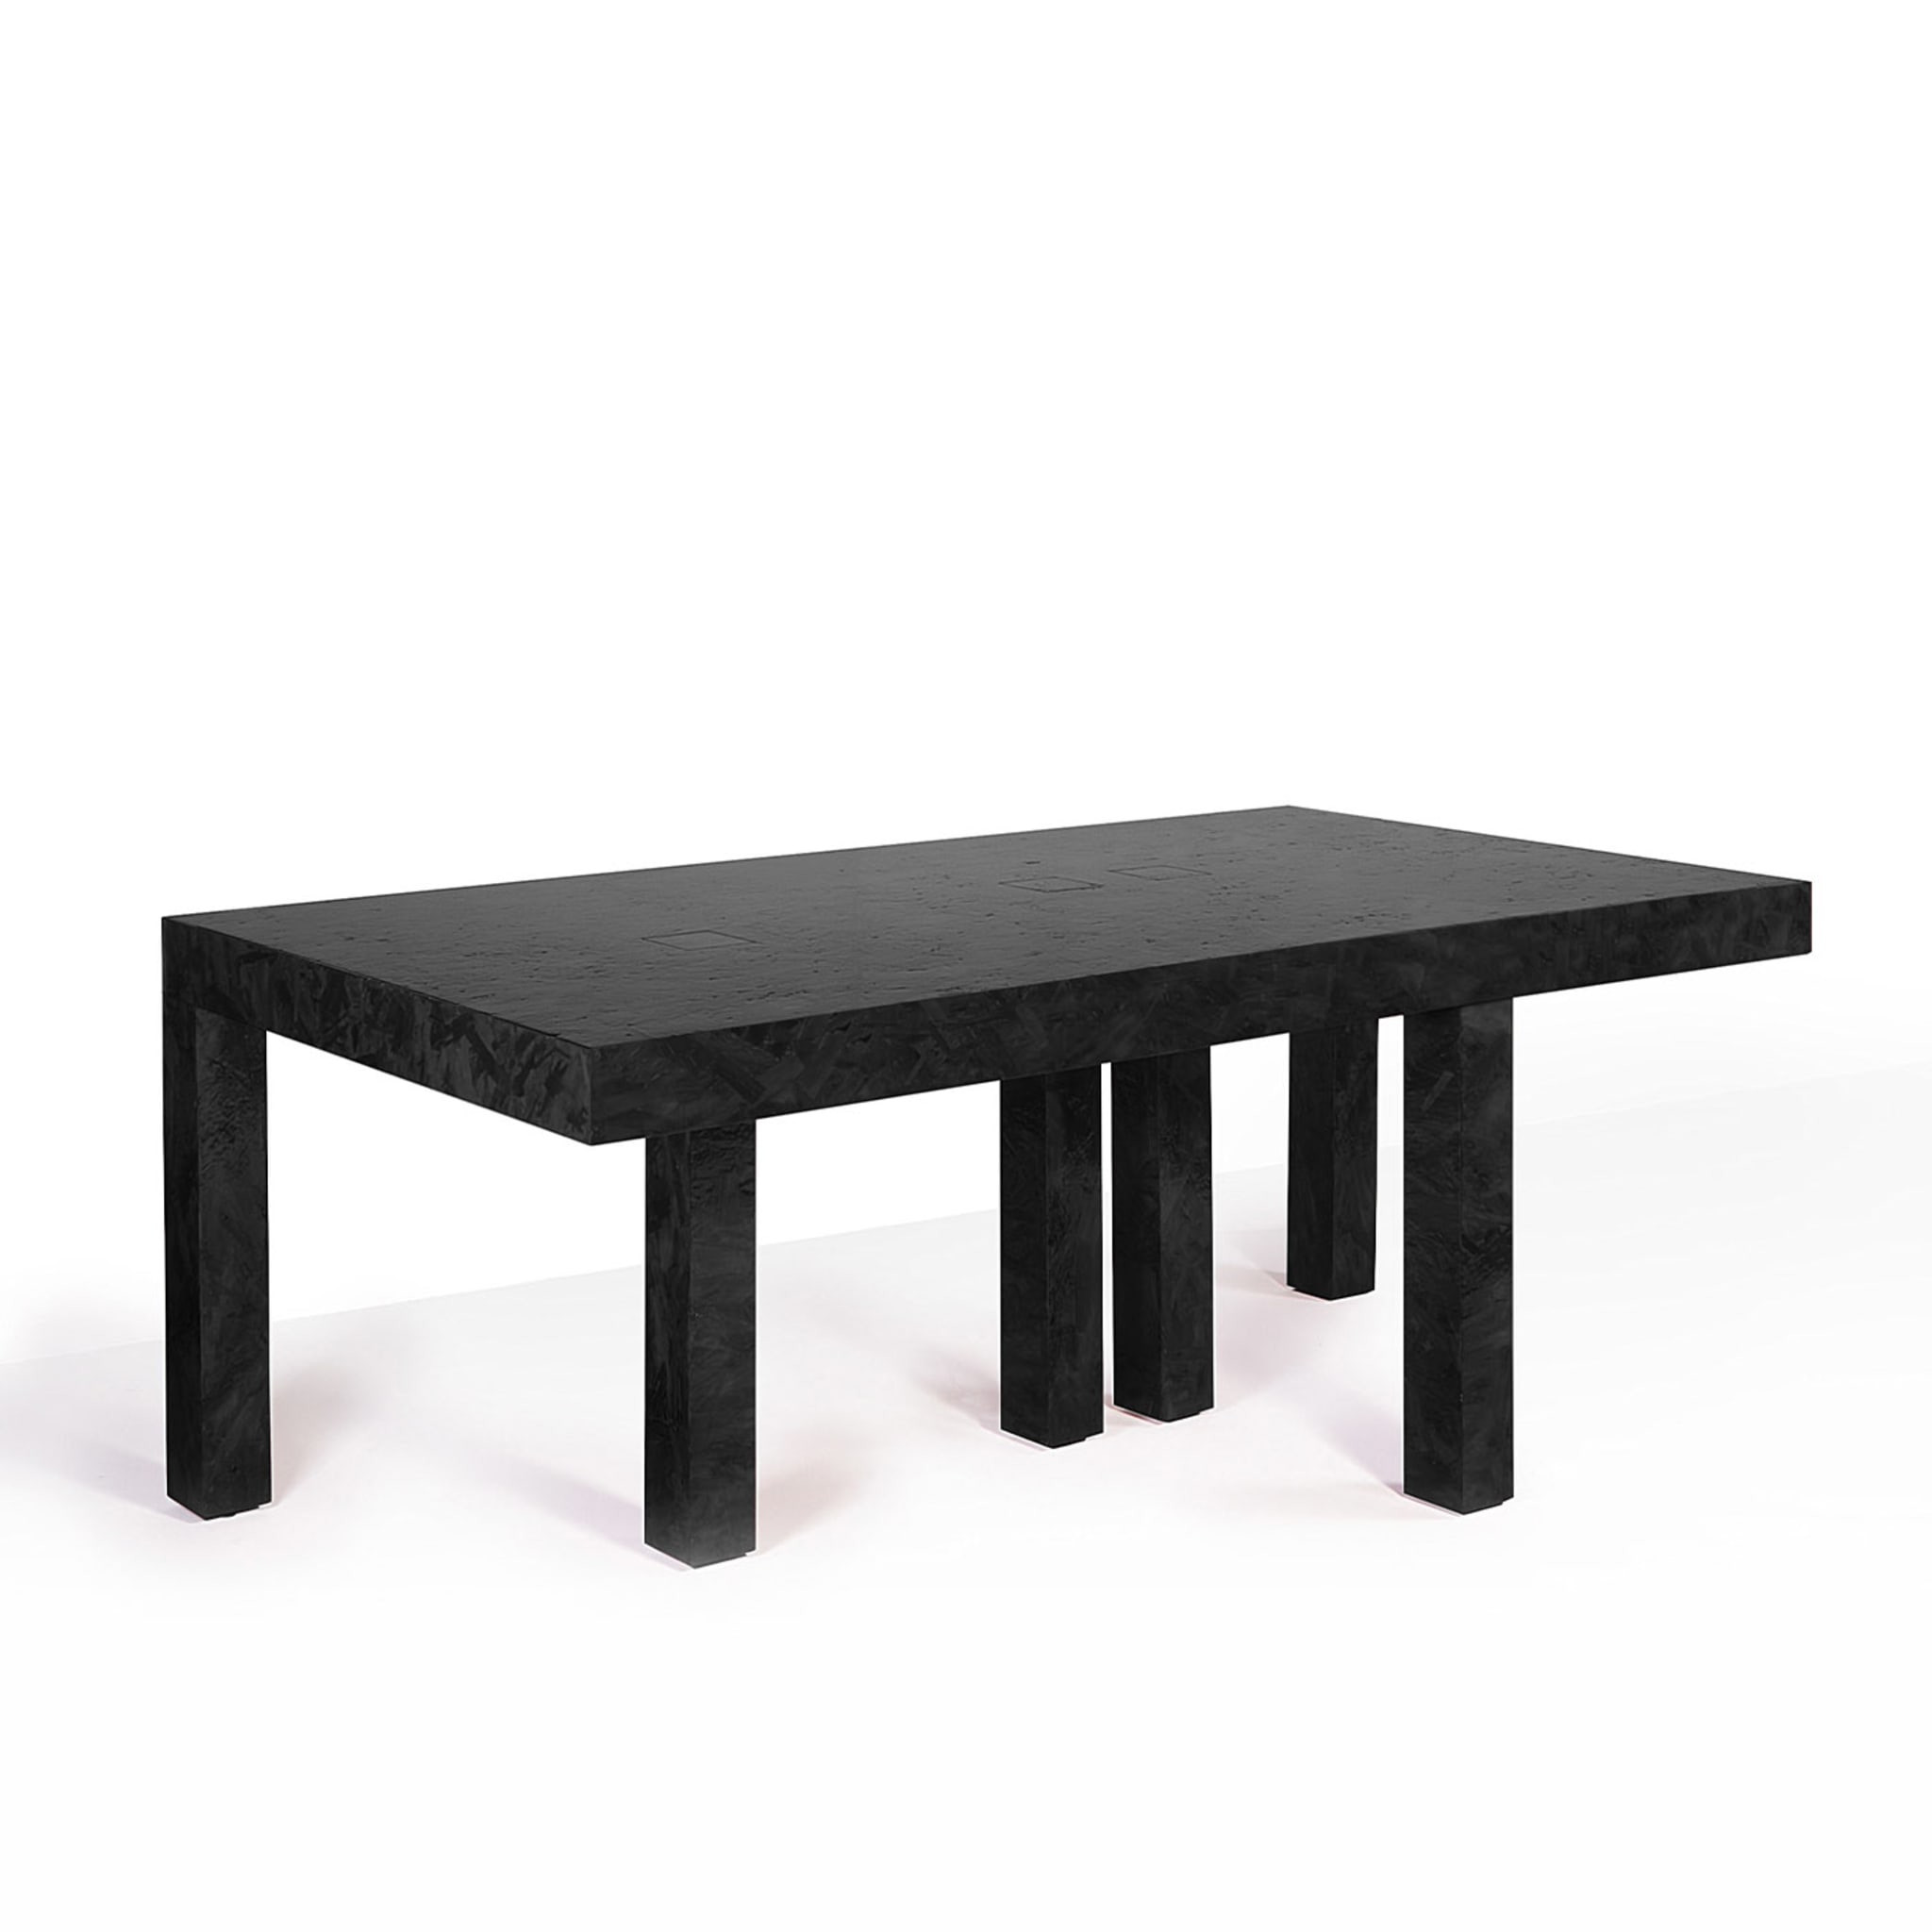 Six-Legged Touch Table Black by Fabrizio Contaldo  - Alternative view 2